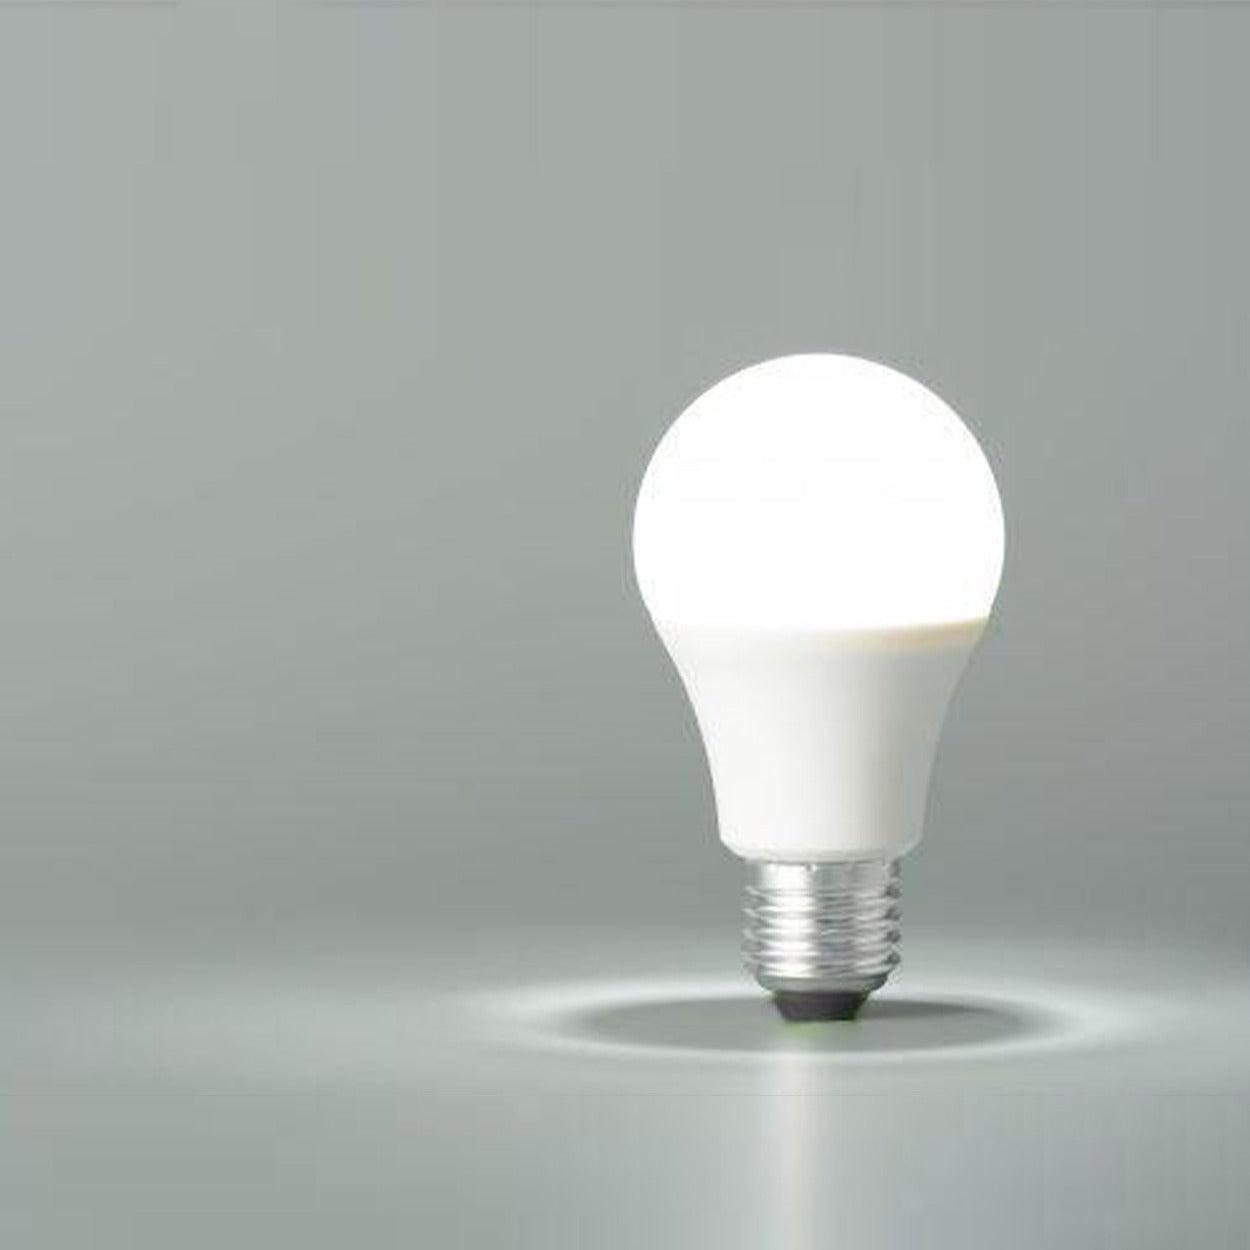 ANKUR GLO FROSTED LED LAMP - Ankur Lighting